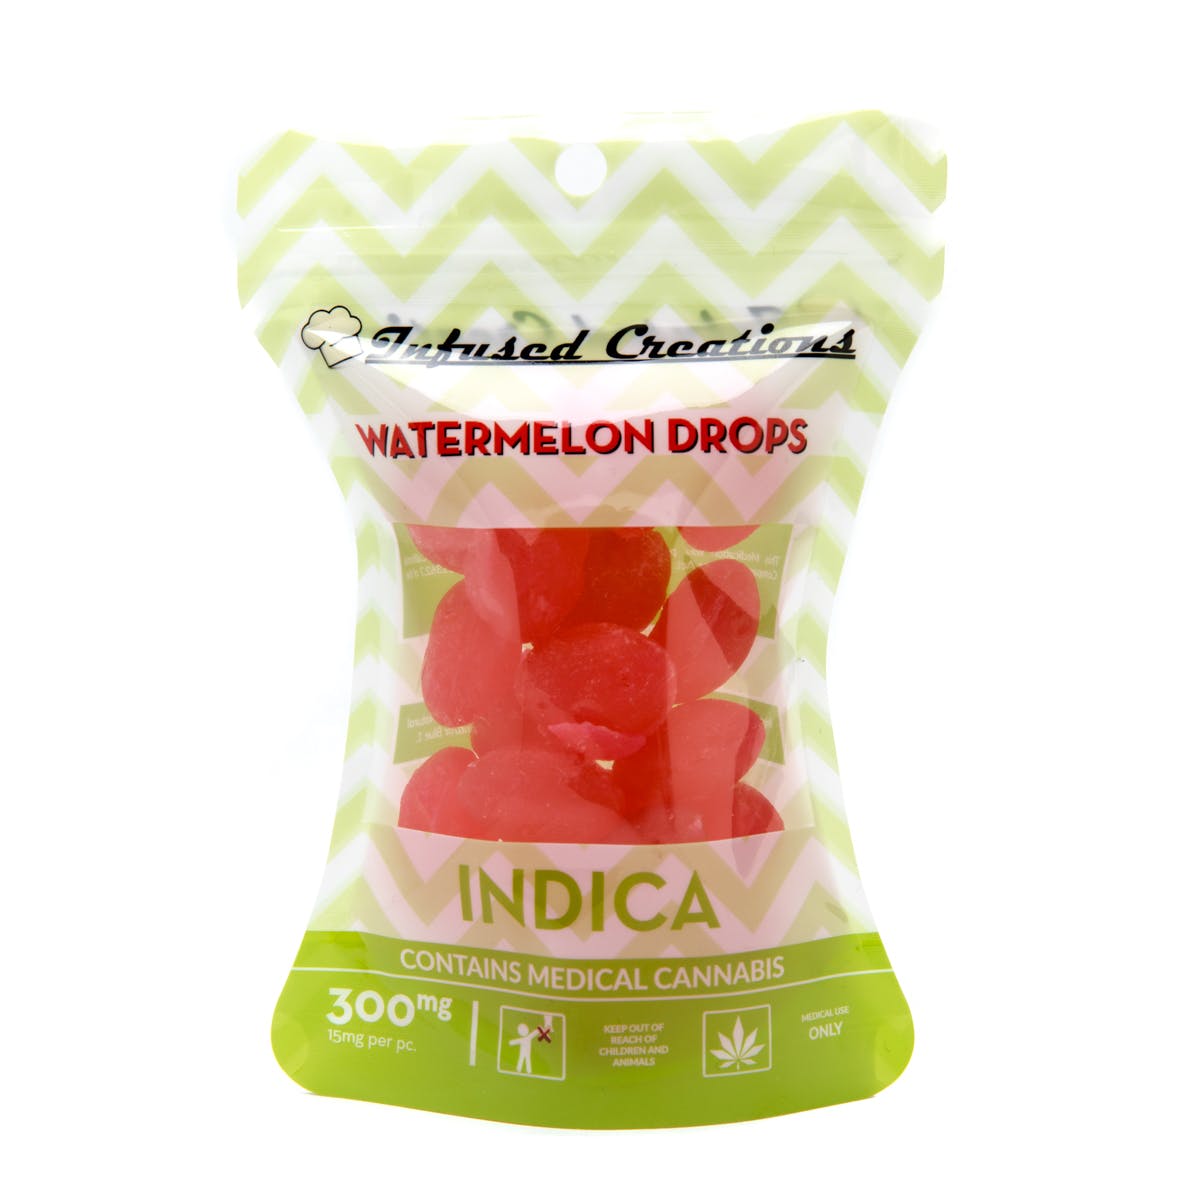 Watermelon Drops Indica, 300mg